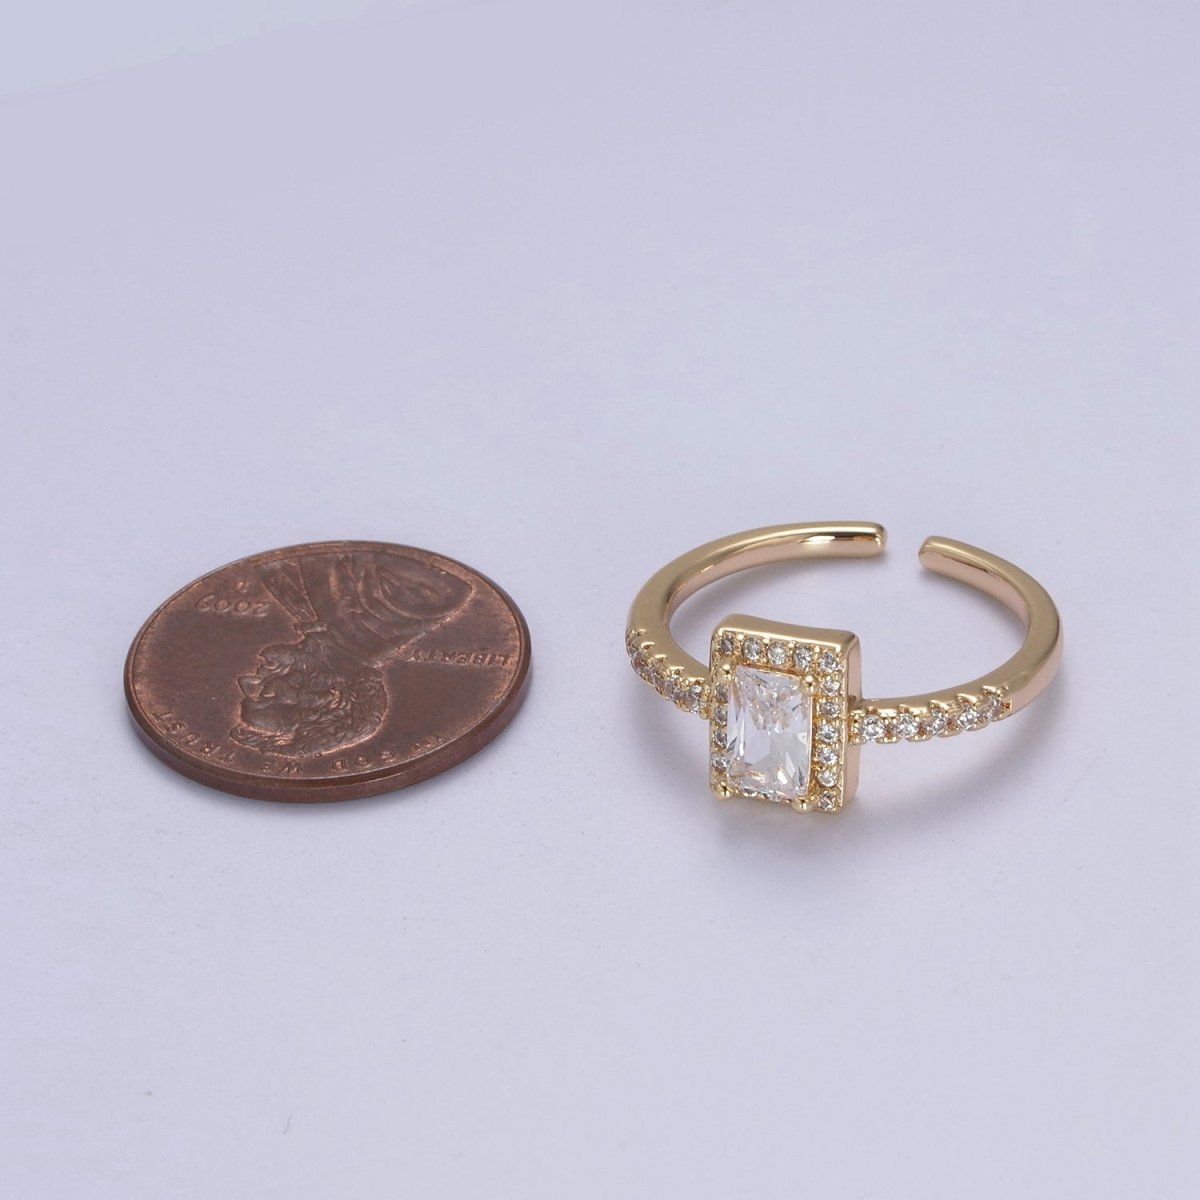 CZ 16k Gold Filled Princess Cut Diamond Cubic Bezel Set Ring Wedding Band Birthday Christmas Gift U-310 - DLUXCA